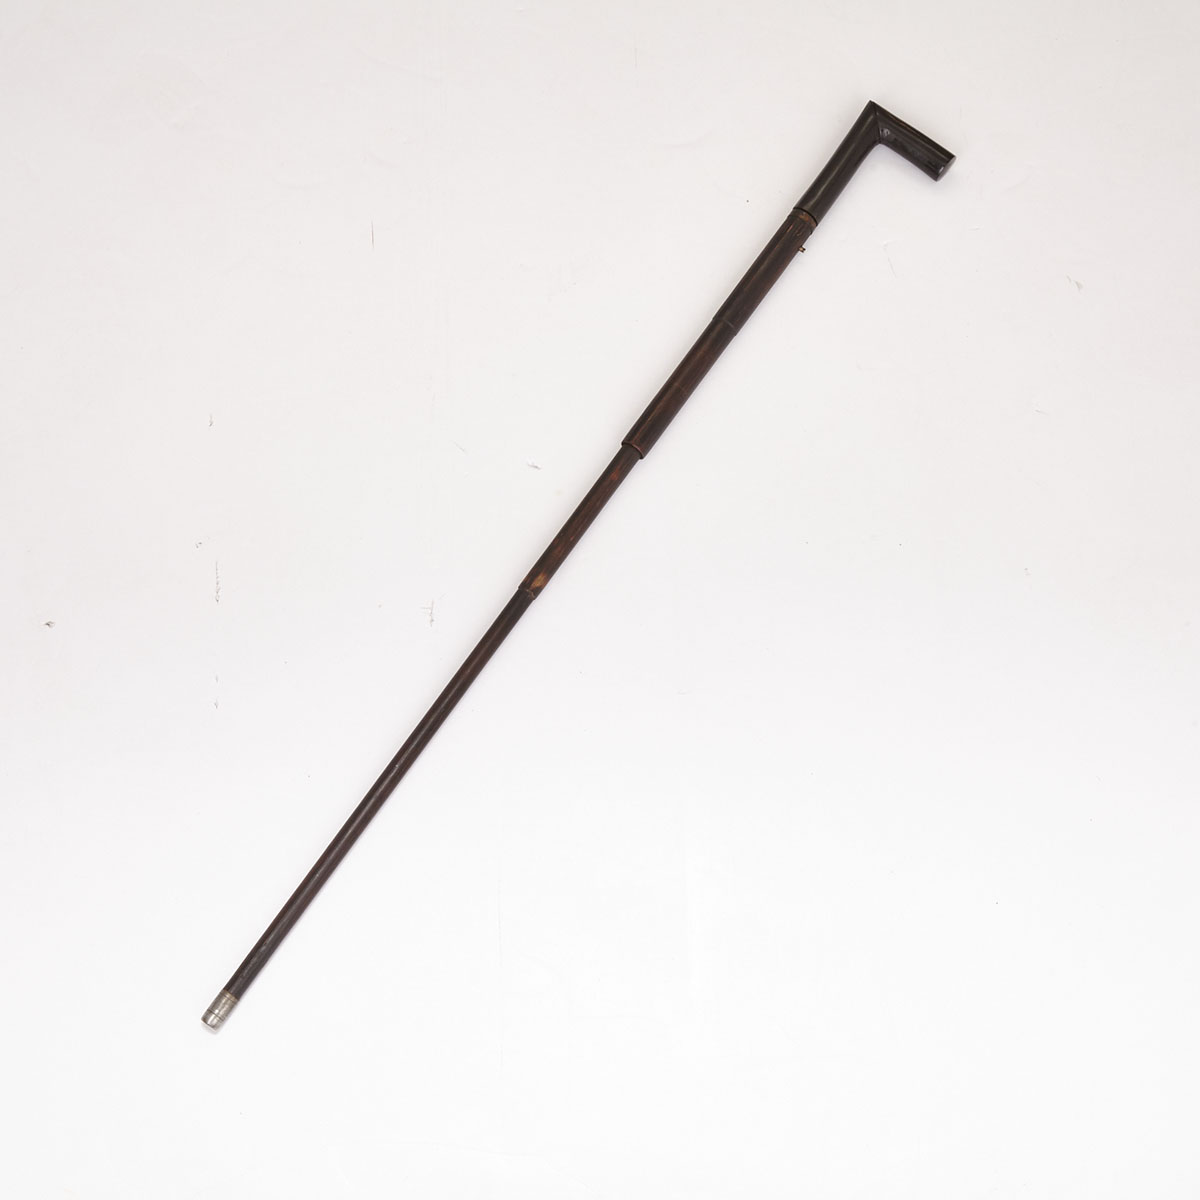 Victorian Elm and Horn Dagger Gadget Cane, 19th century